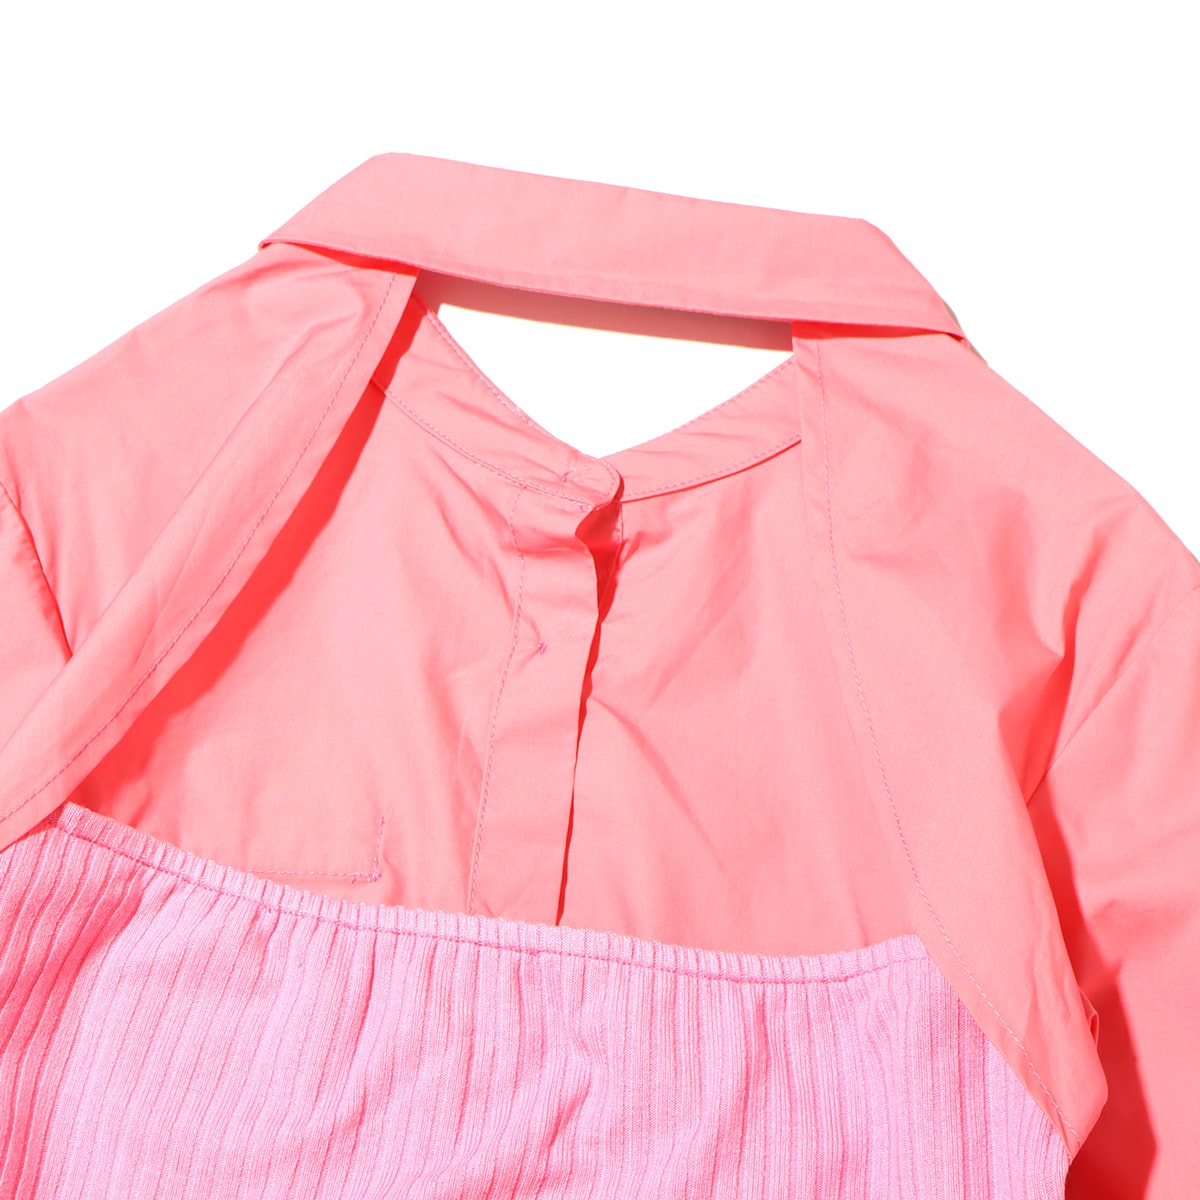 atmos pink バックオープンショートシャツ PINK